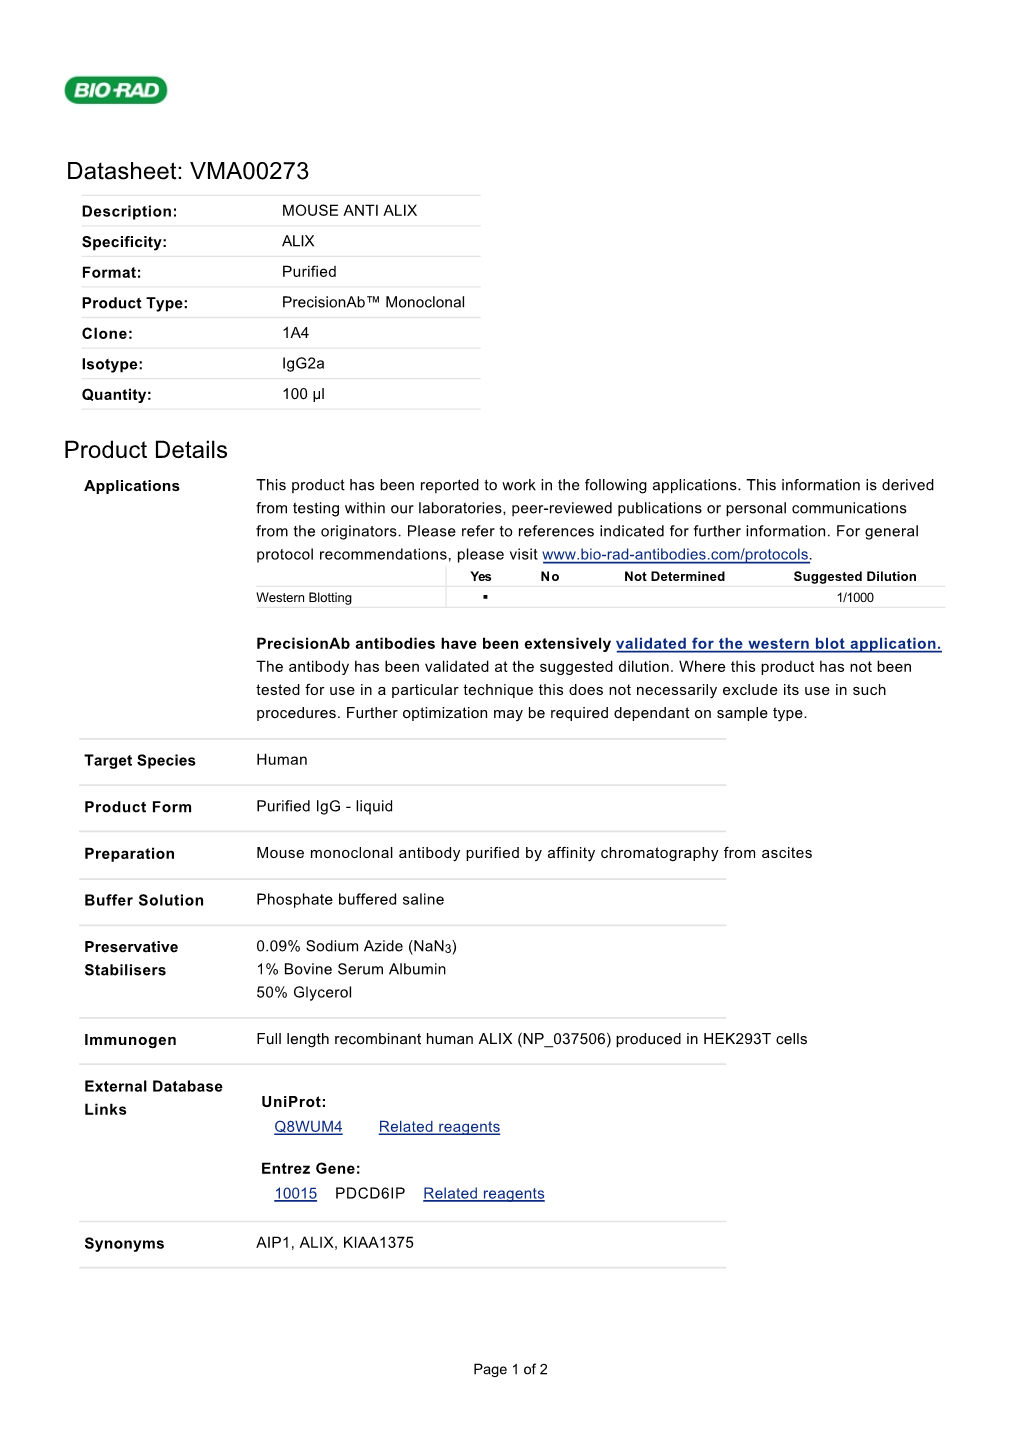 Datasheet: VMA00273 Product Details